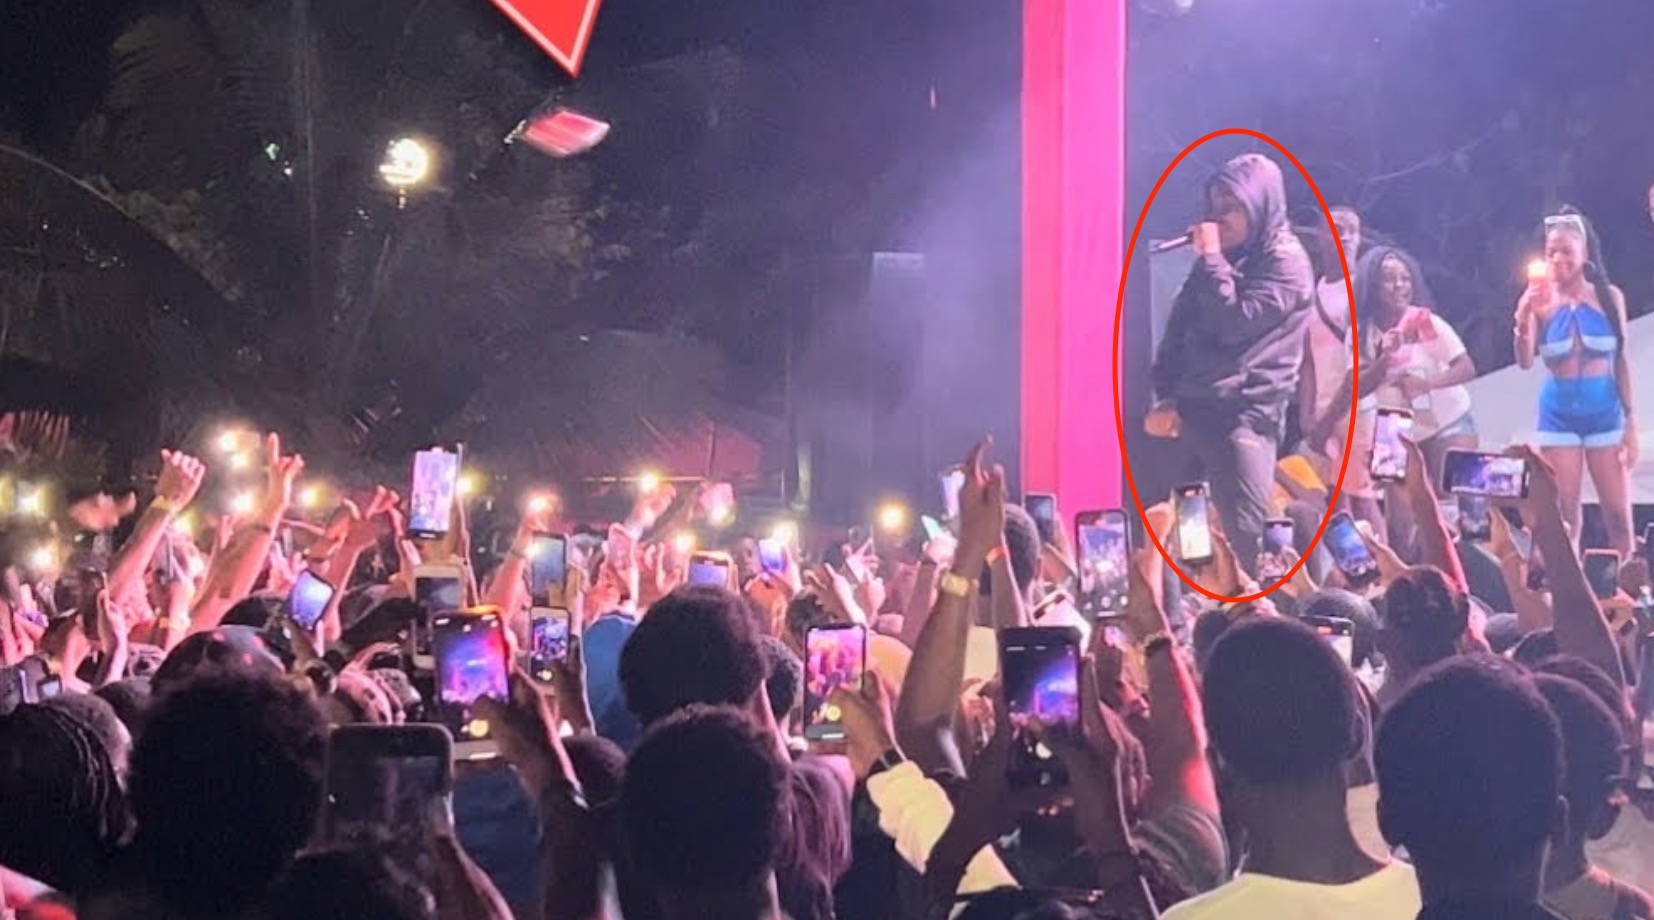 Malie Donn Bottled While Performing in Ochi Rios, Flings Microphone In Crowd In Retaliation - Watch Video 